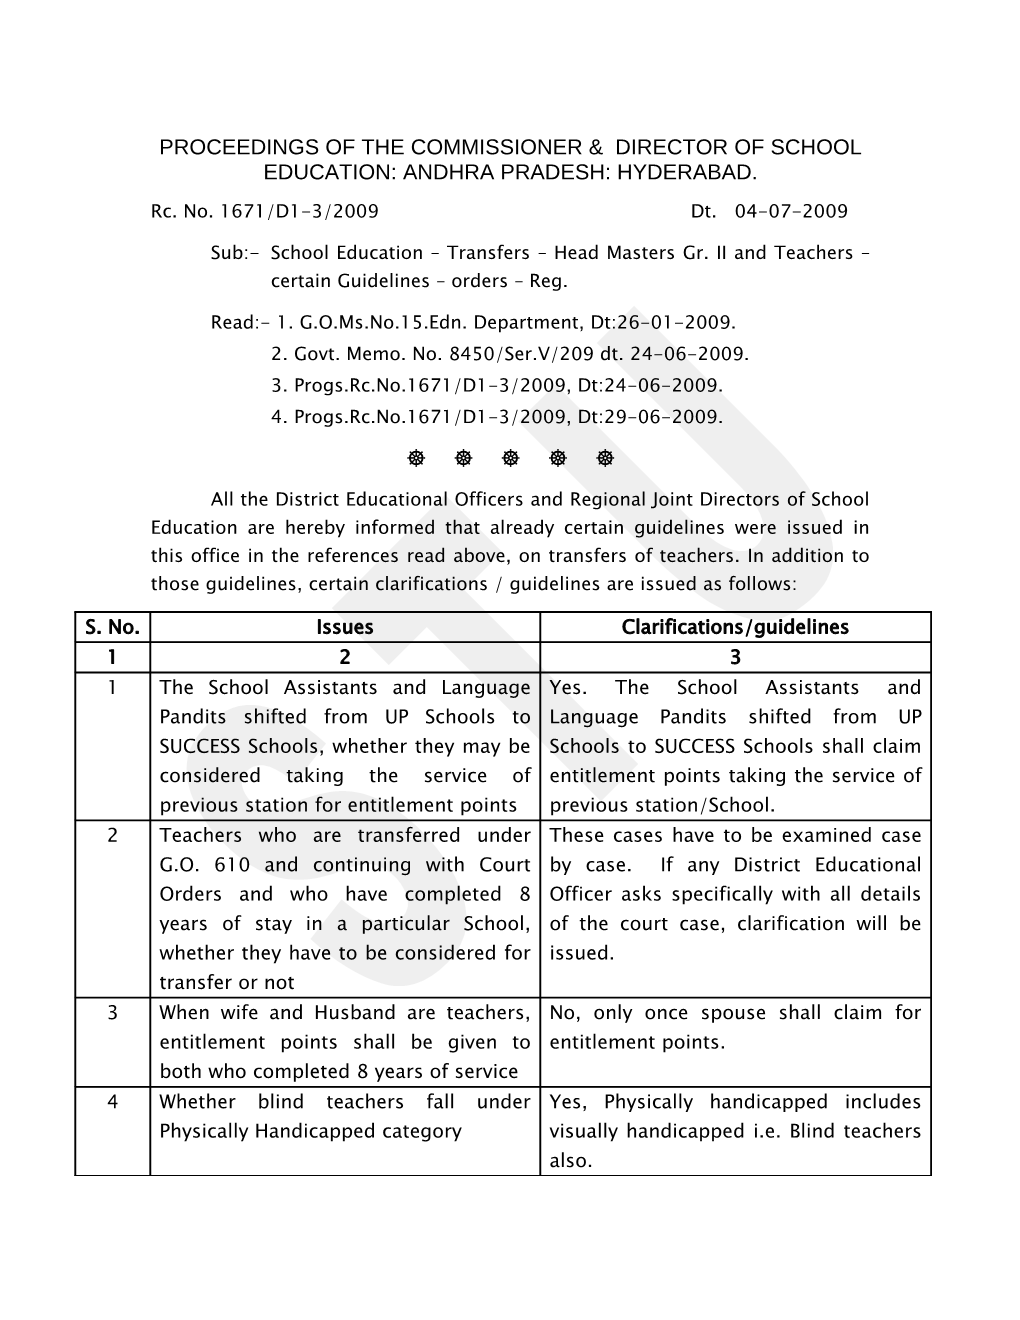 Proceedings of the Commissioner & Director of School Education: Andhra Pradesh: Hyderabad